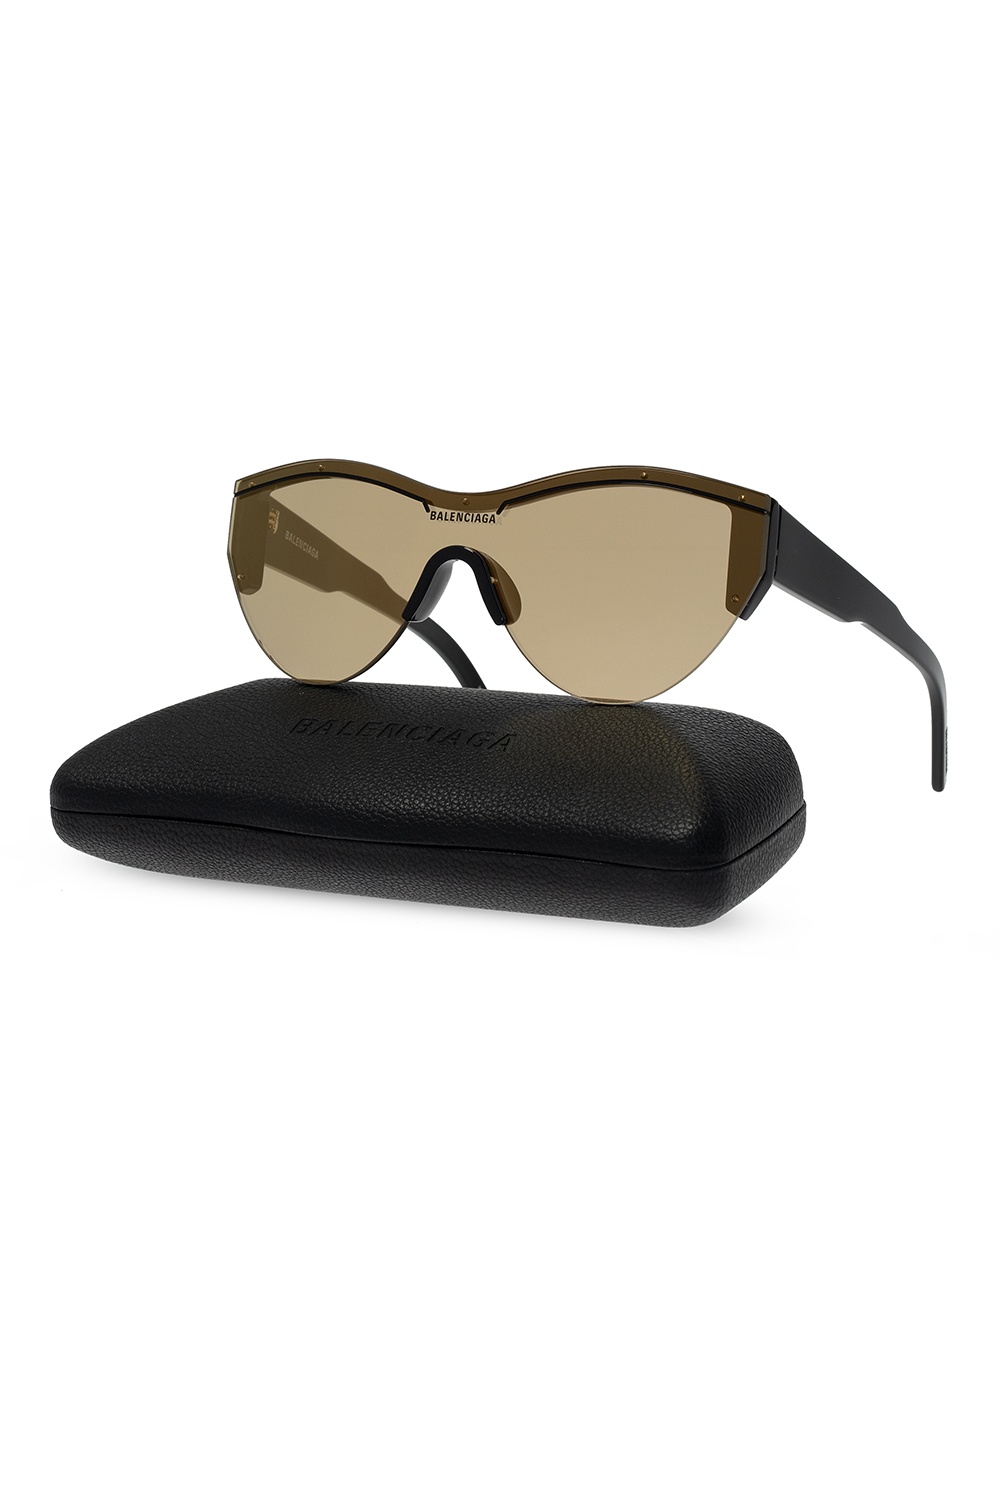 Balenciaga B-II tinted-lens sunglasses